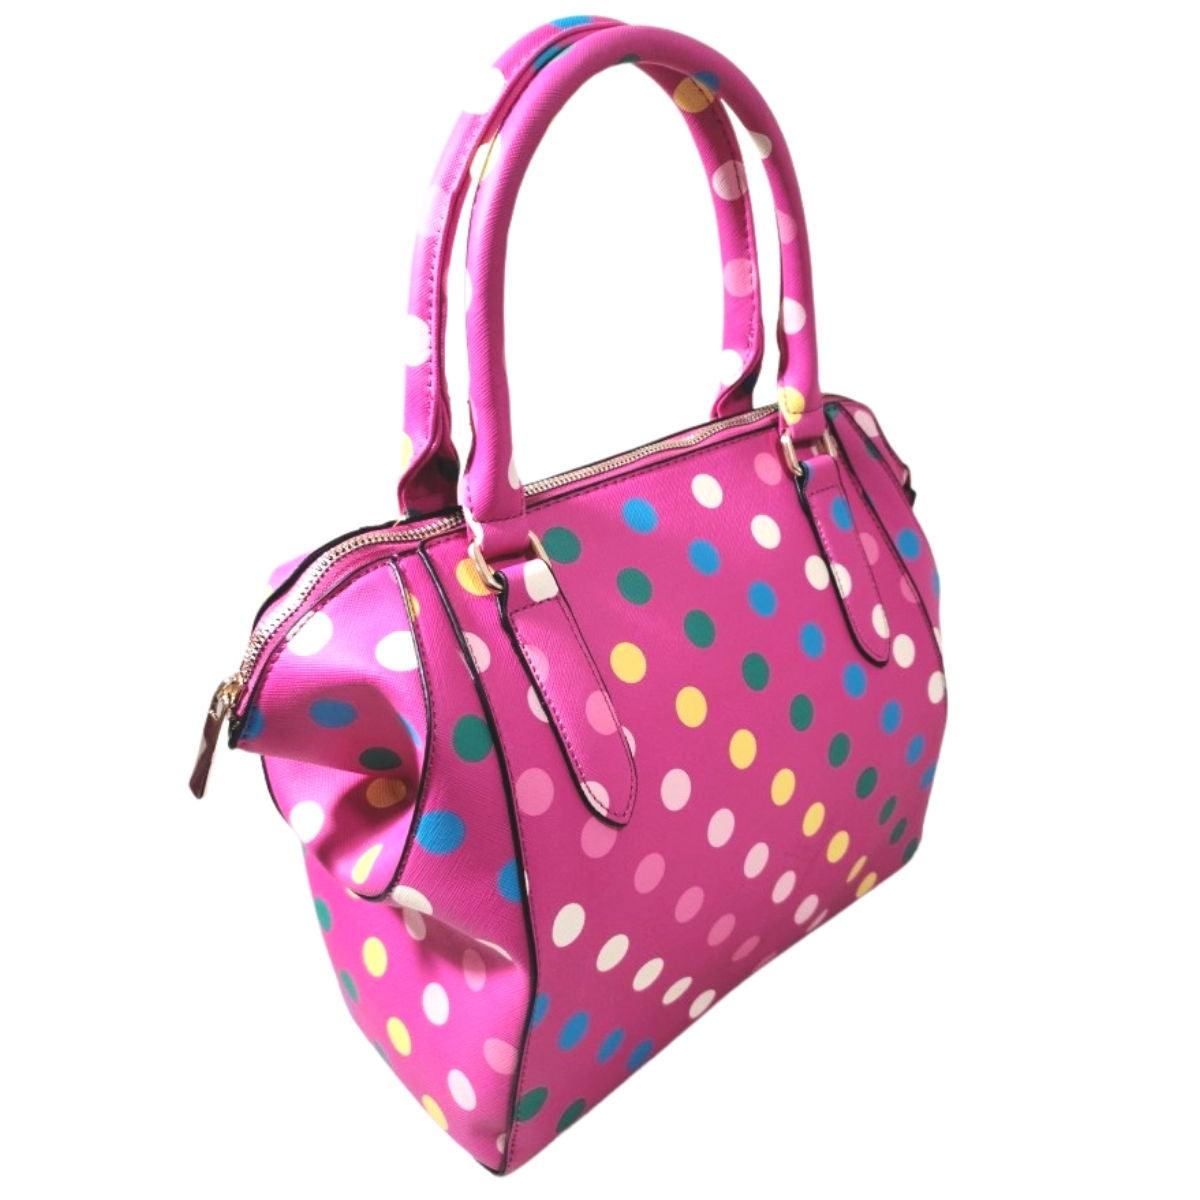 Trendy Pink Handbag Set: Polka Dot Print for Stylish Women